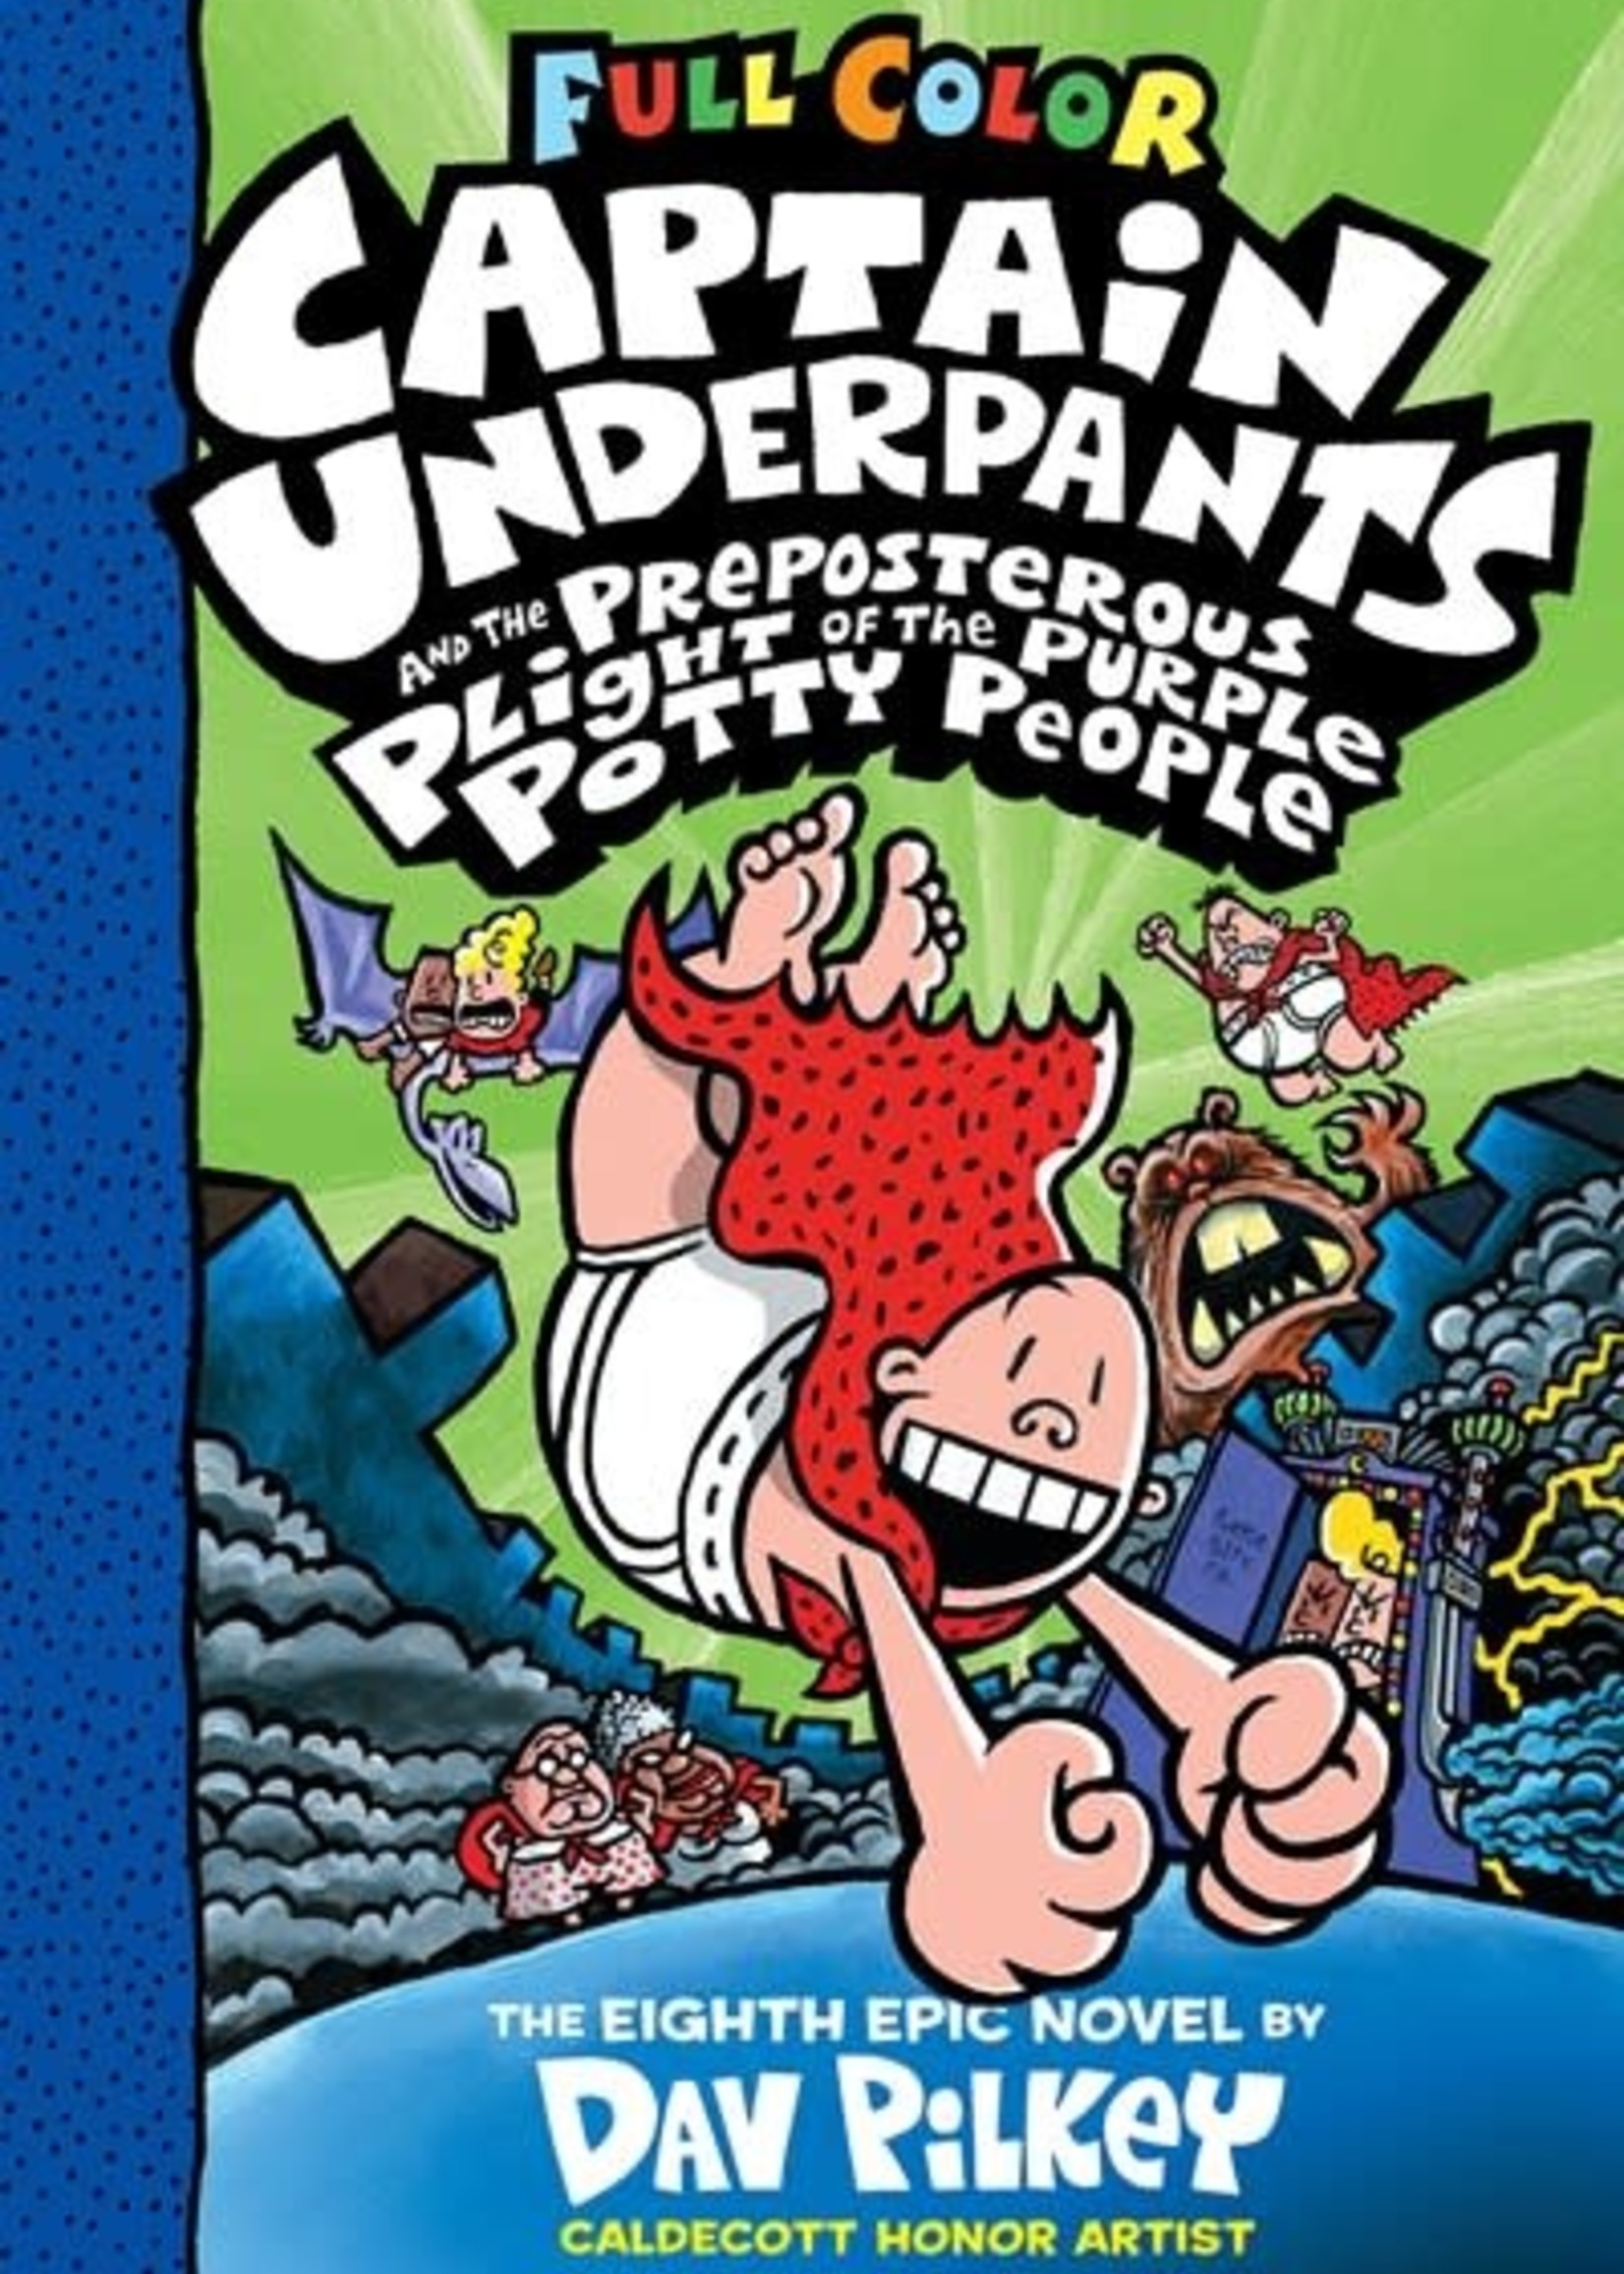 Captain Underpants 8 Preposterous Plight of the Purple Potty People